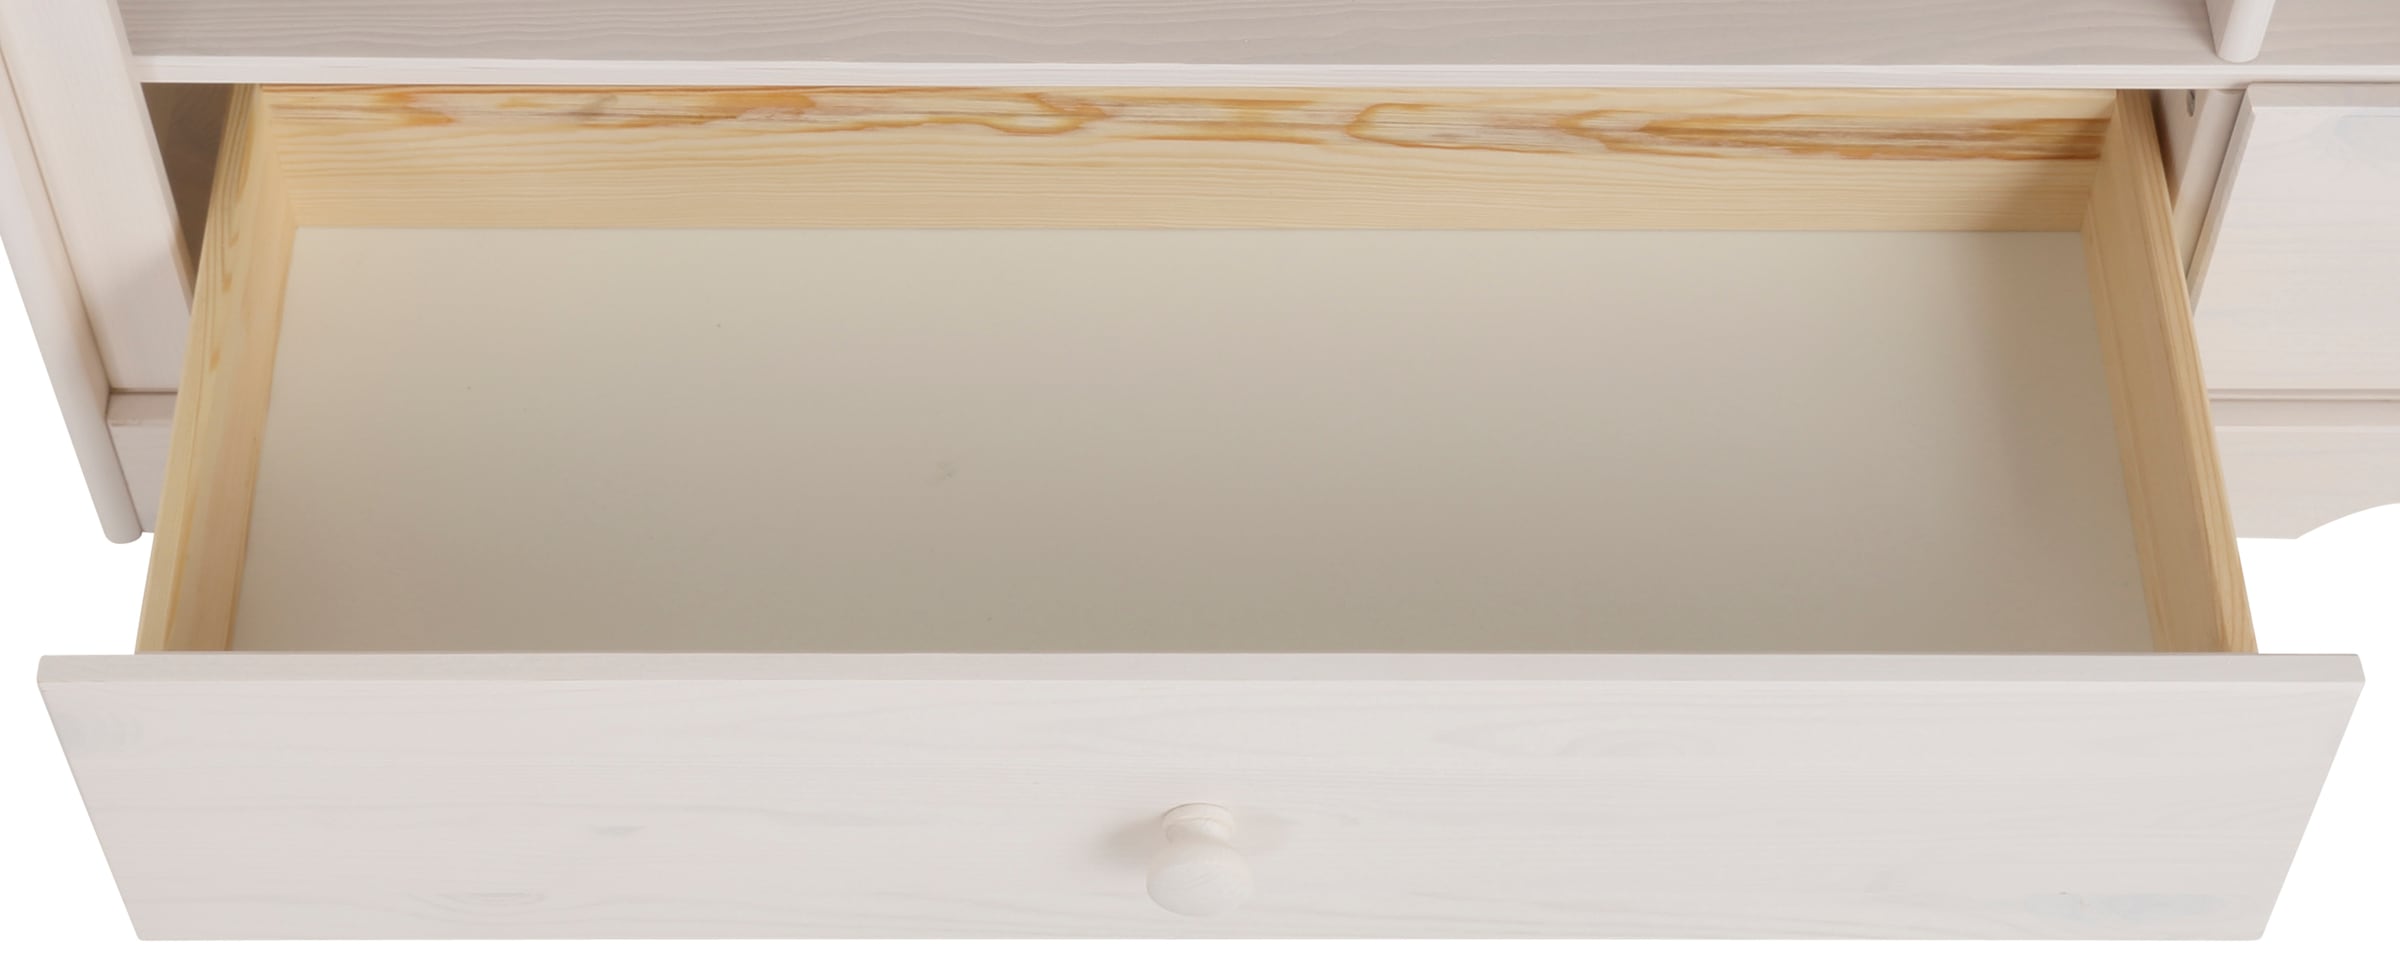 Home affaire Lowboard »Poehl«, Breite 160 cm, aus massiver Kiefer